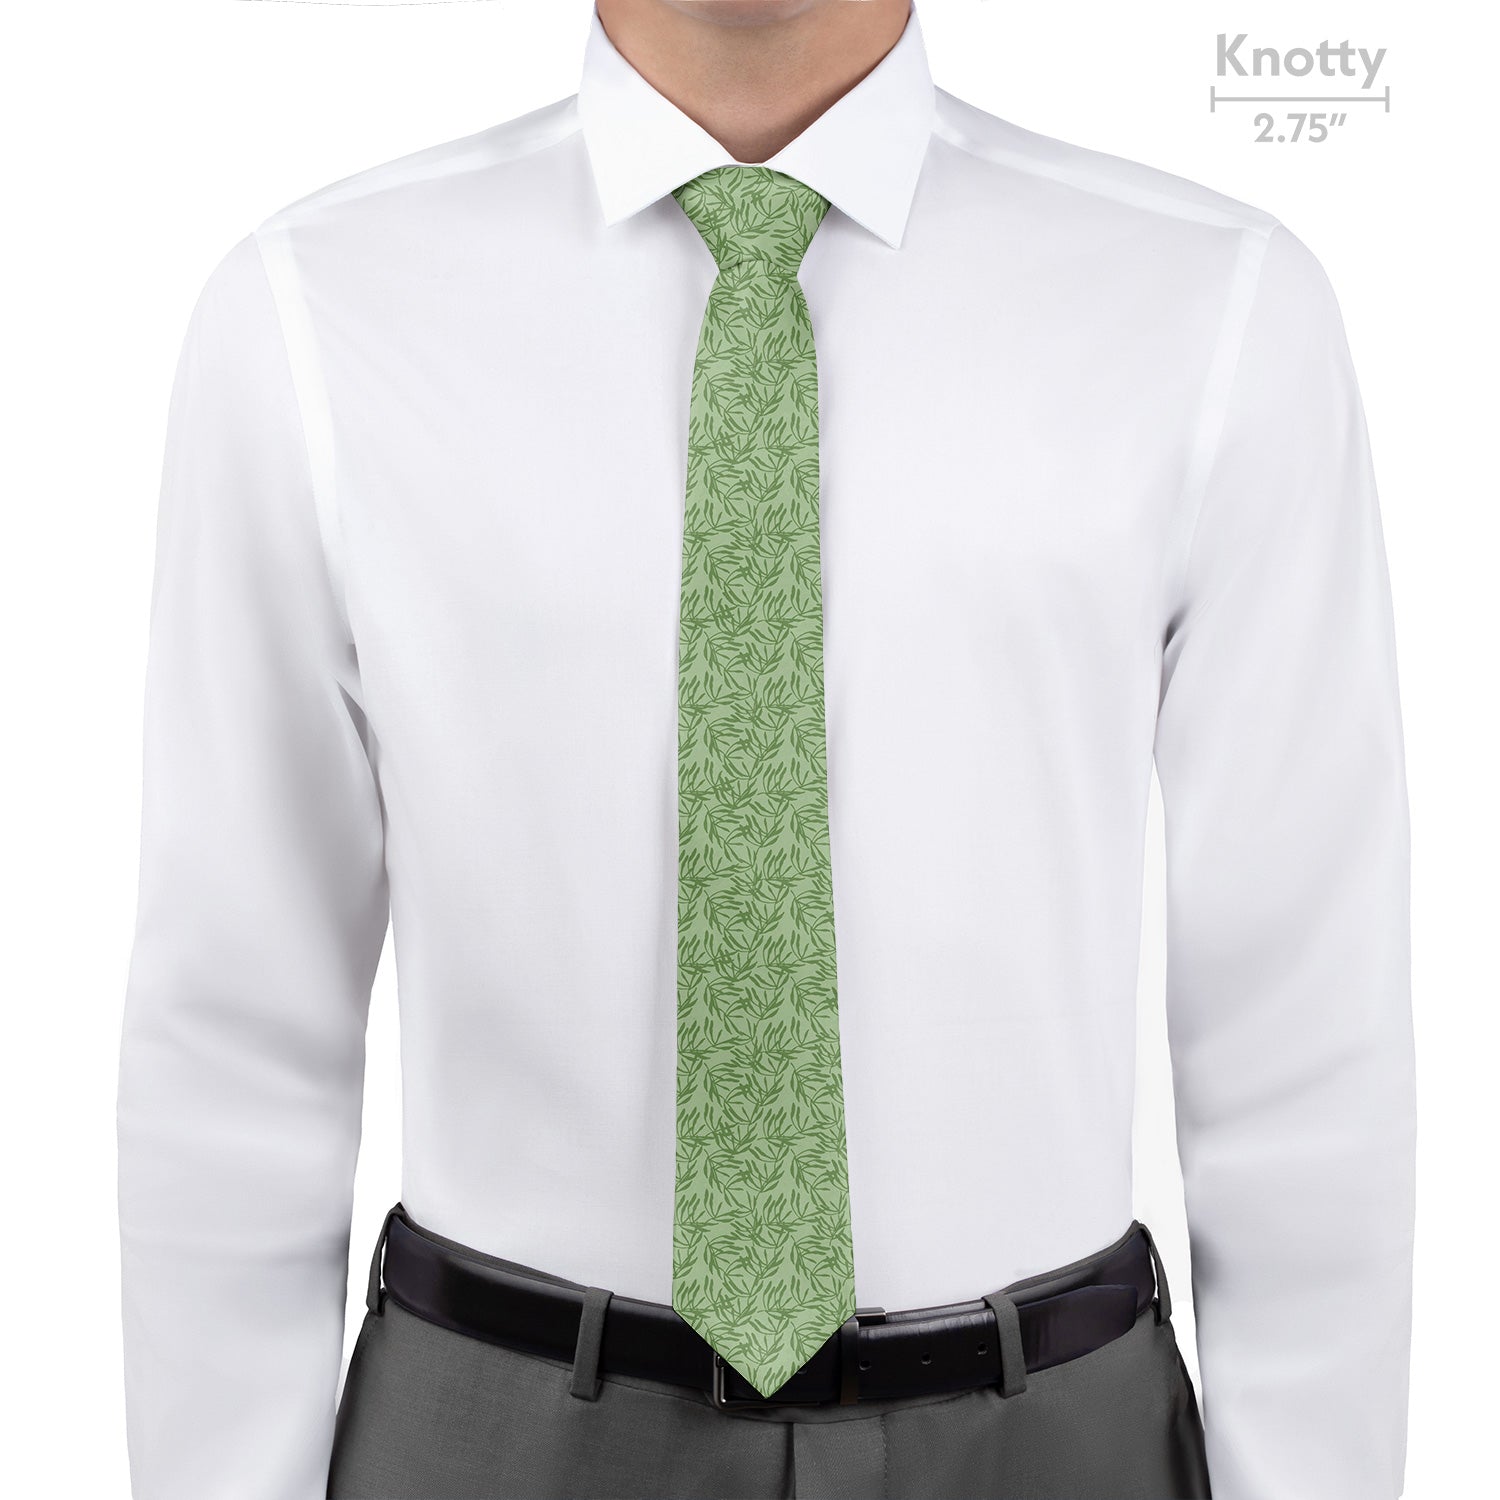 Olive Leaf Floral Necktie - Knotty - Knotty Tie Co.